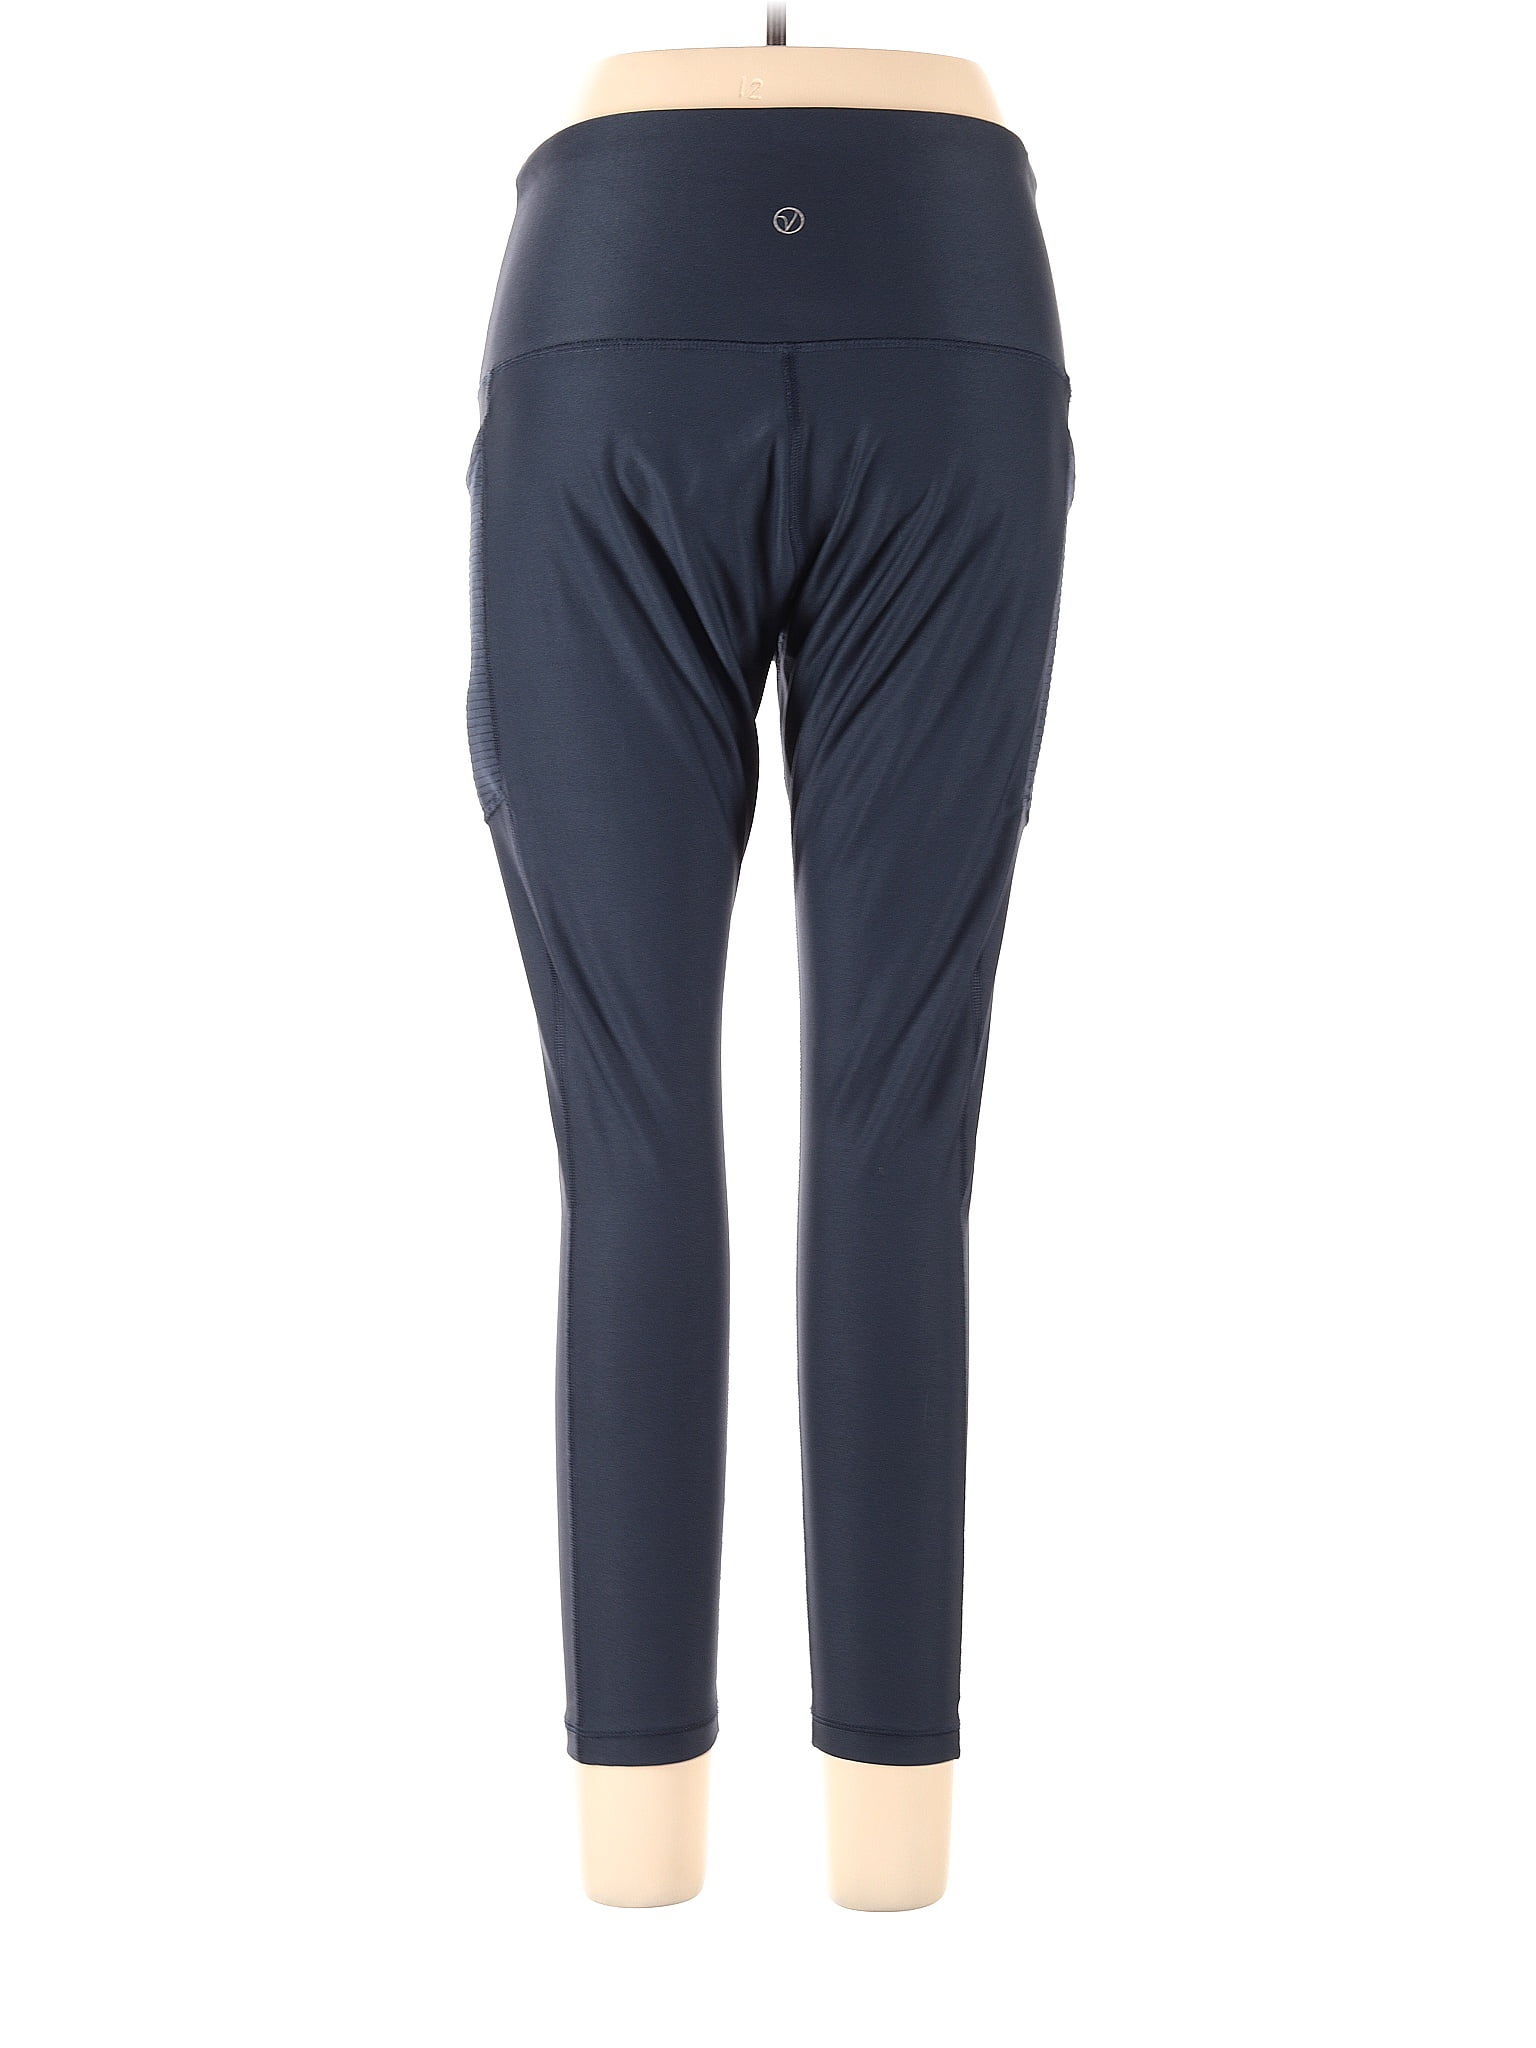 VOGO Athletica Navy Blue Active Pants Size XL - 67% off